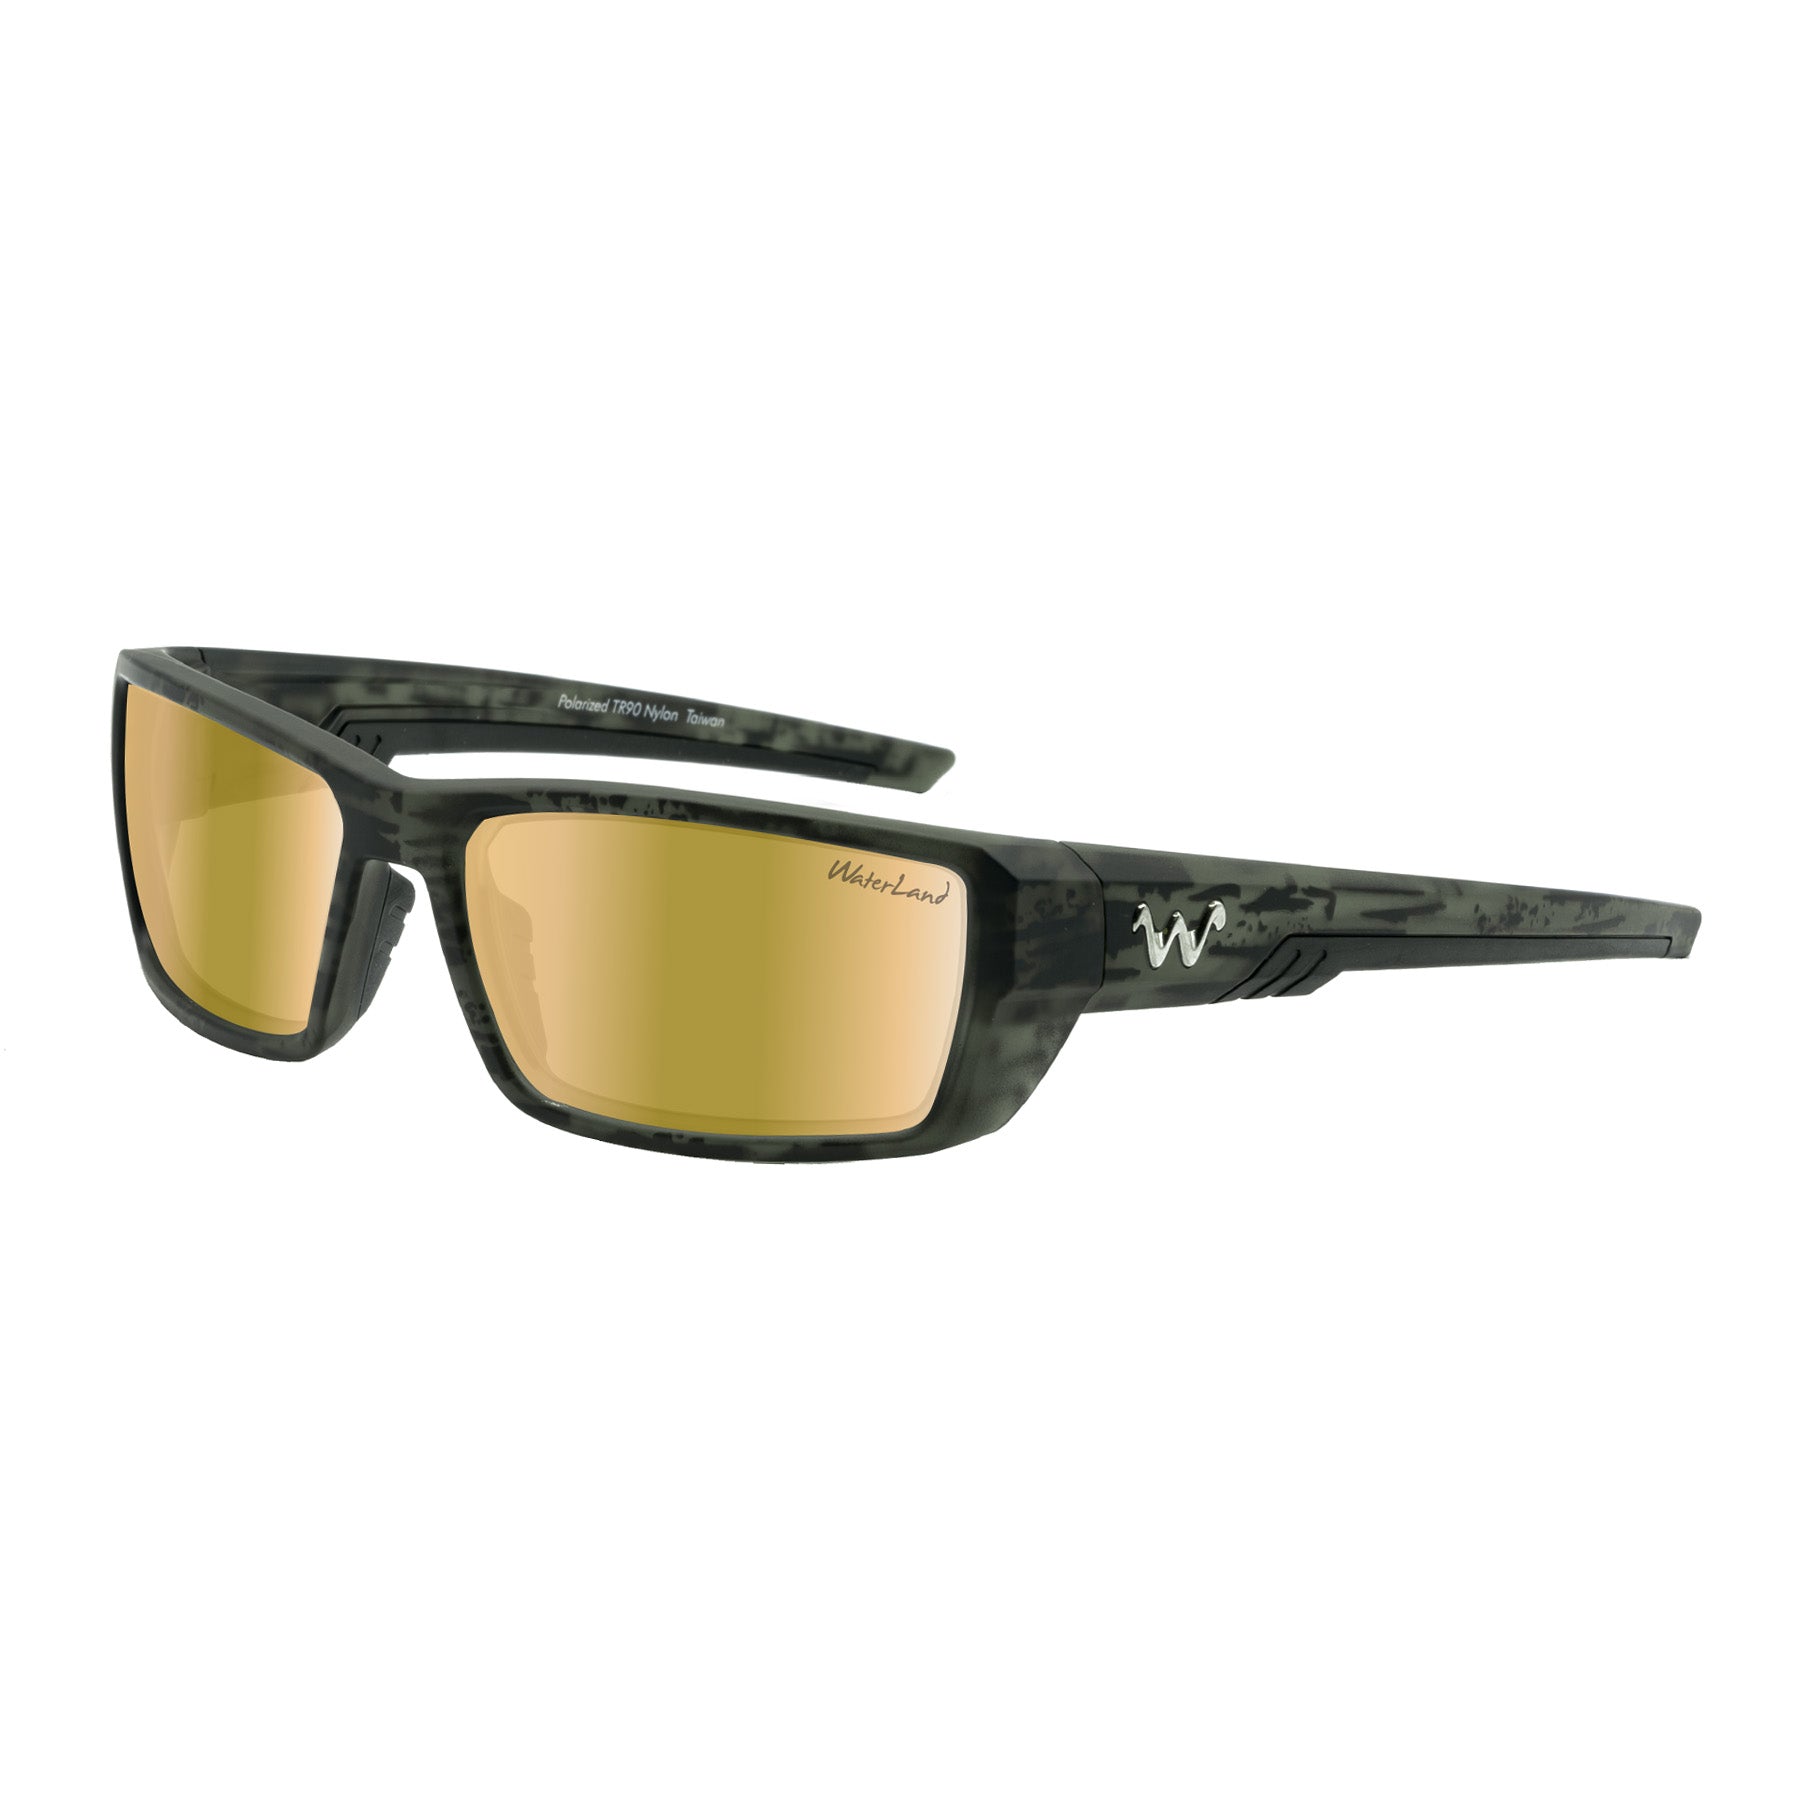 Waterland Hybro Sunglasses Black/Silver Mirror